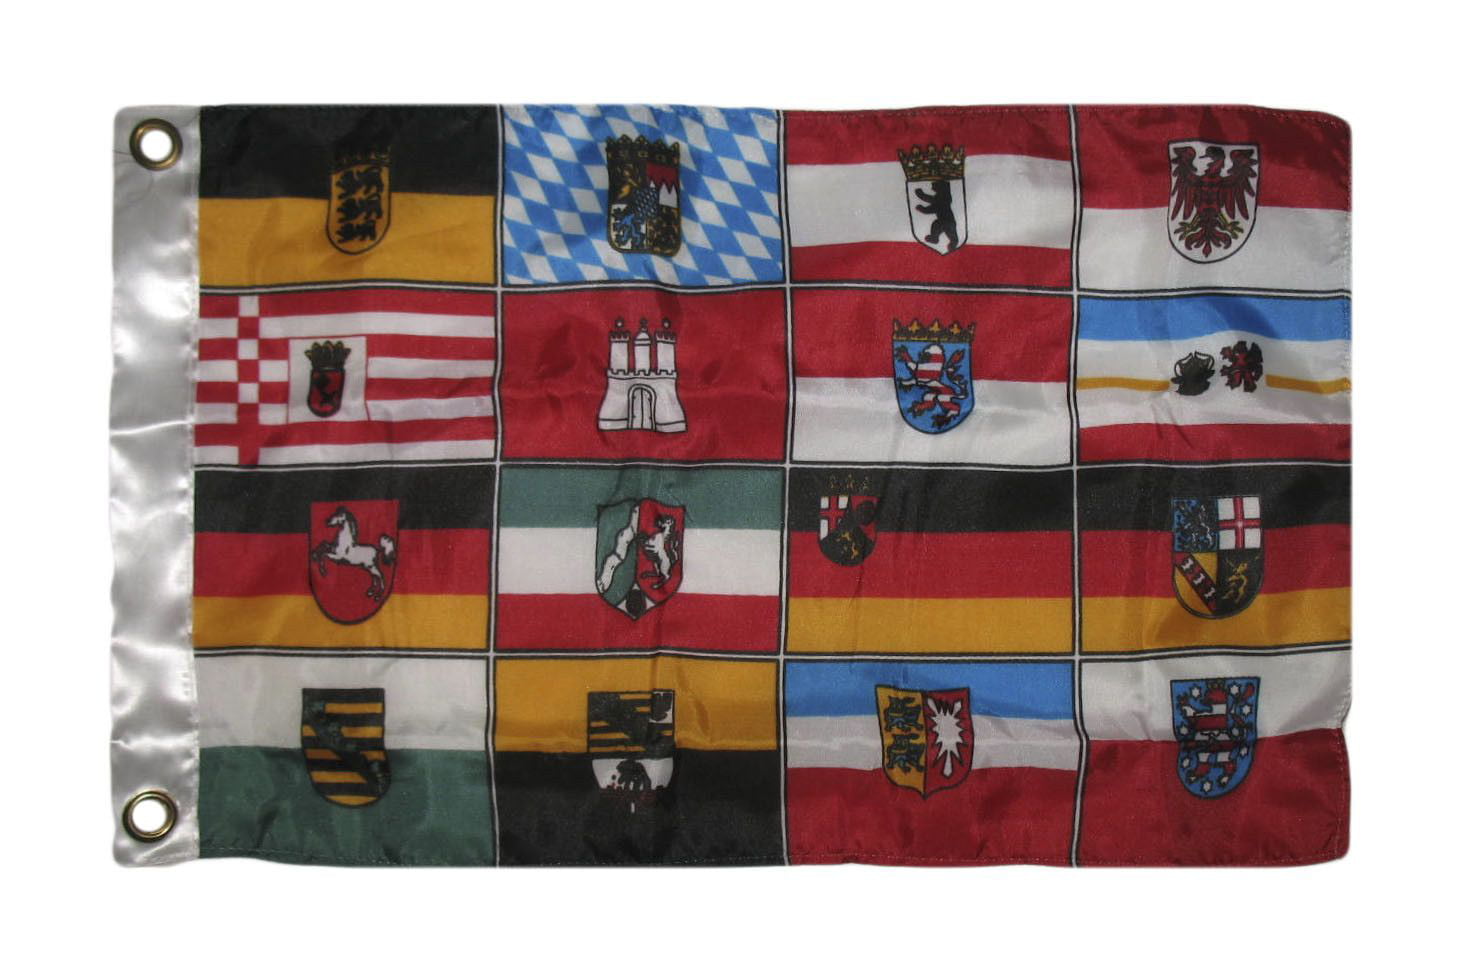 RHEINLAND PFALZ GERMANY POLYESTER INTERNATIONAL COUNTRY FLAG 3 X 5 FEET 